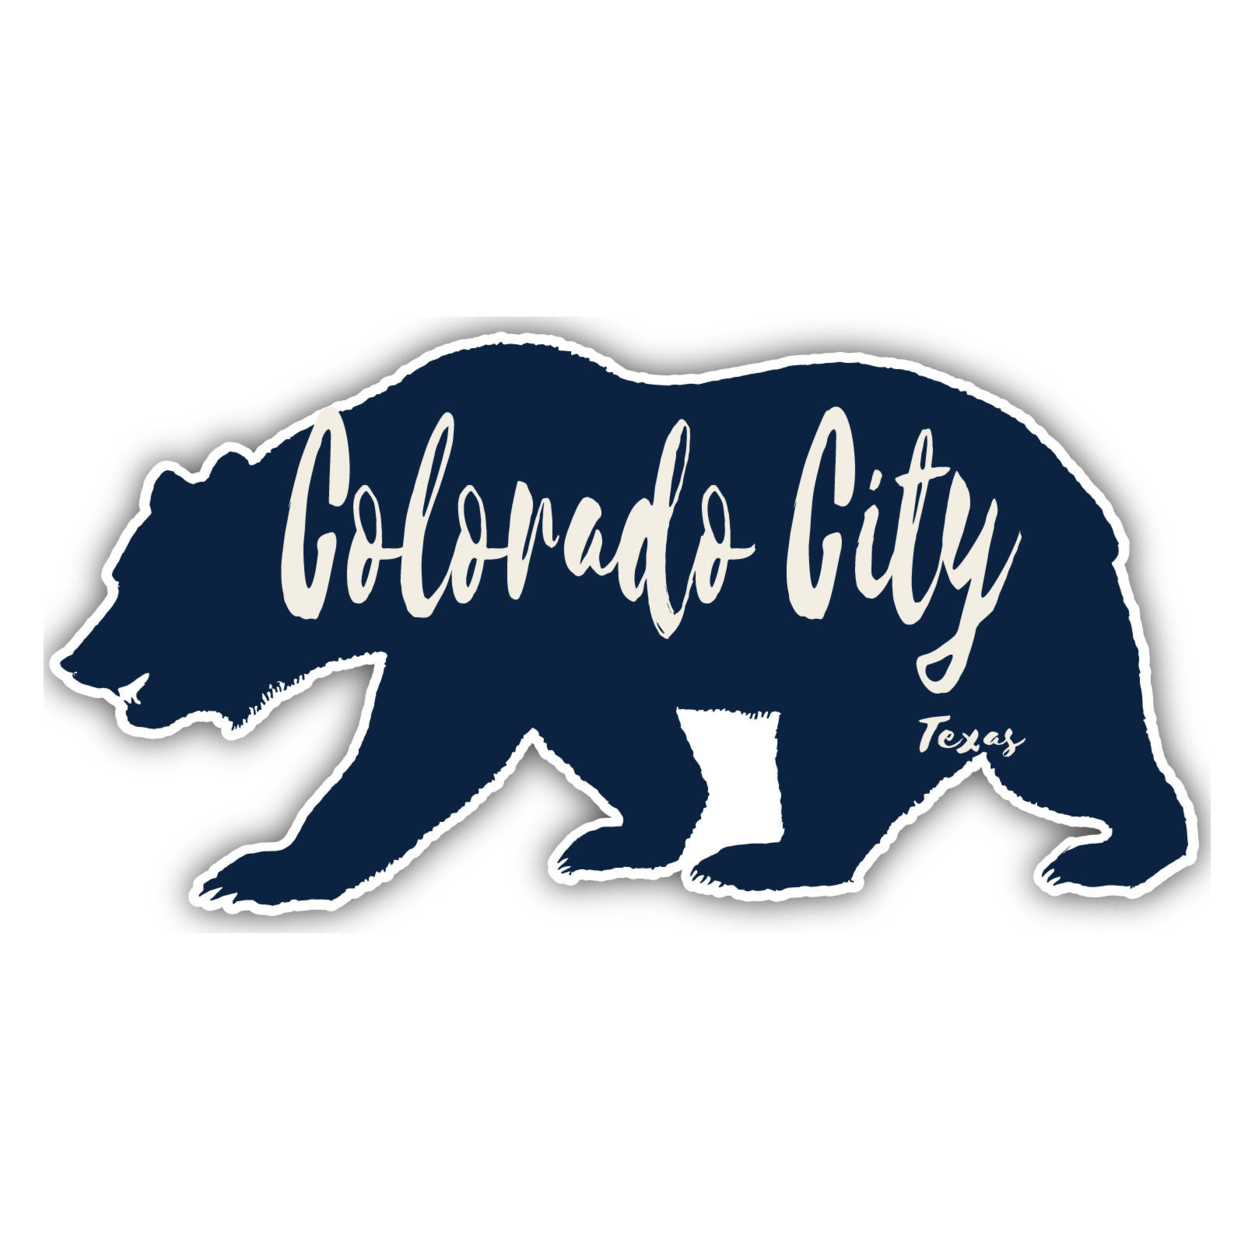 Colorado City Texas Souvenir Decorative Stickers (Choose Theme And Size) - 4-Pack, 8-Inch, Bear